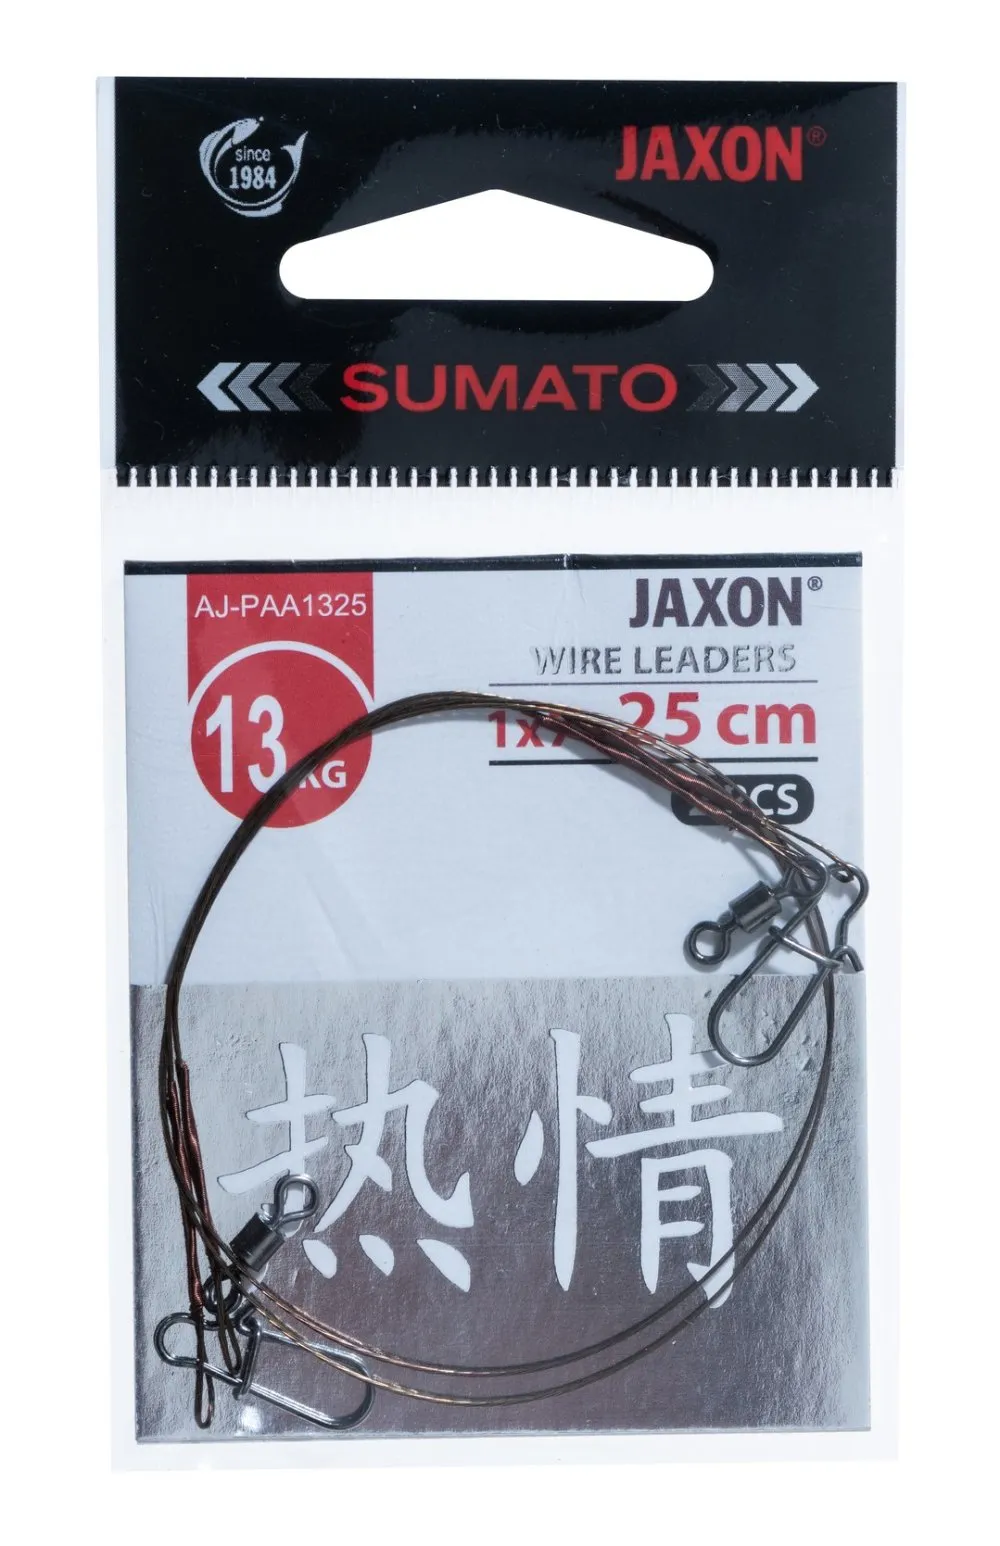 SNECI - Horgász webshop és horgászbolt - JAXON SUMATO WIRE LEADERS 9kg 20cm